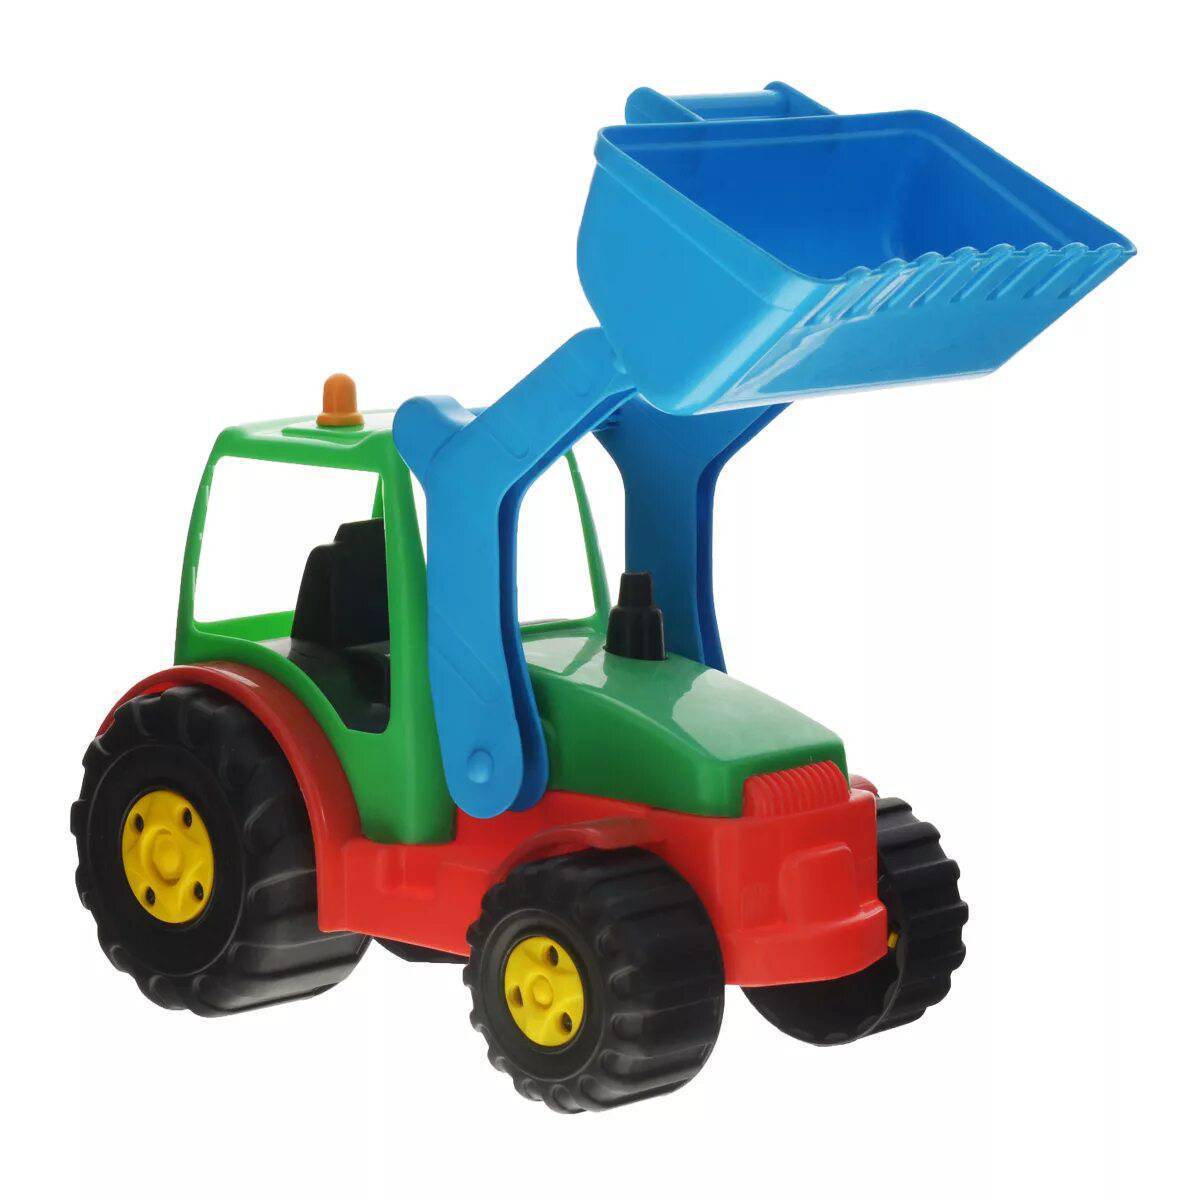 Трактор игрушка. Детские трактора. Машинки и трактора игрушки. Детские тракторы игрушки.